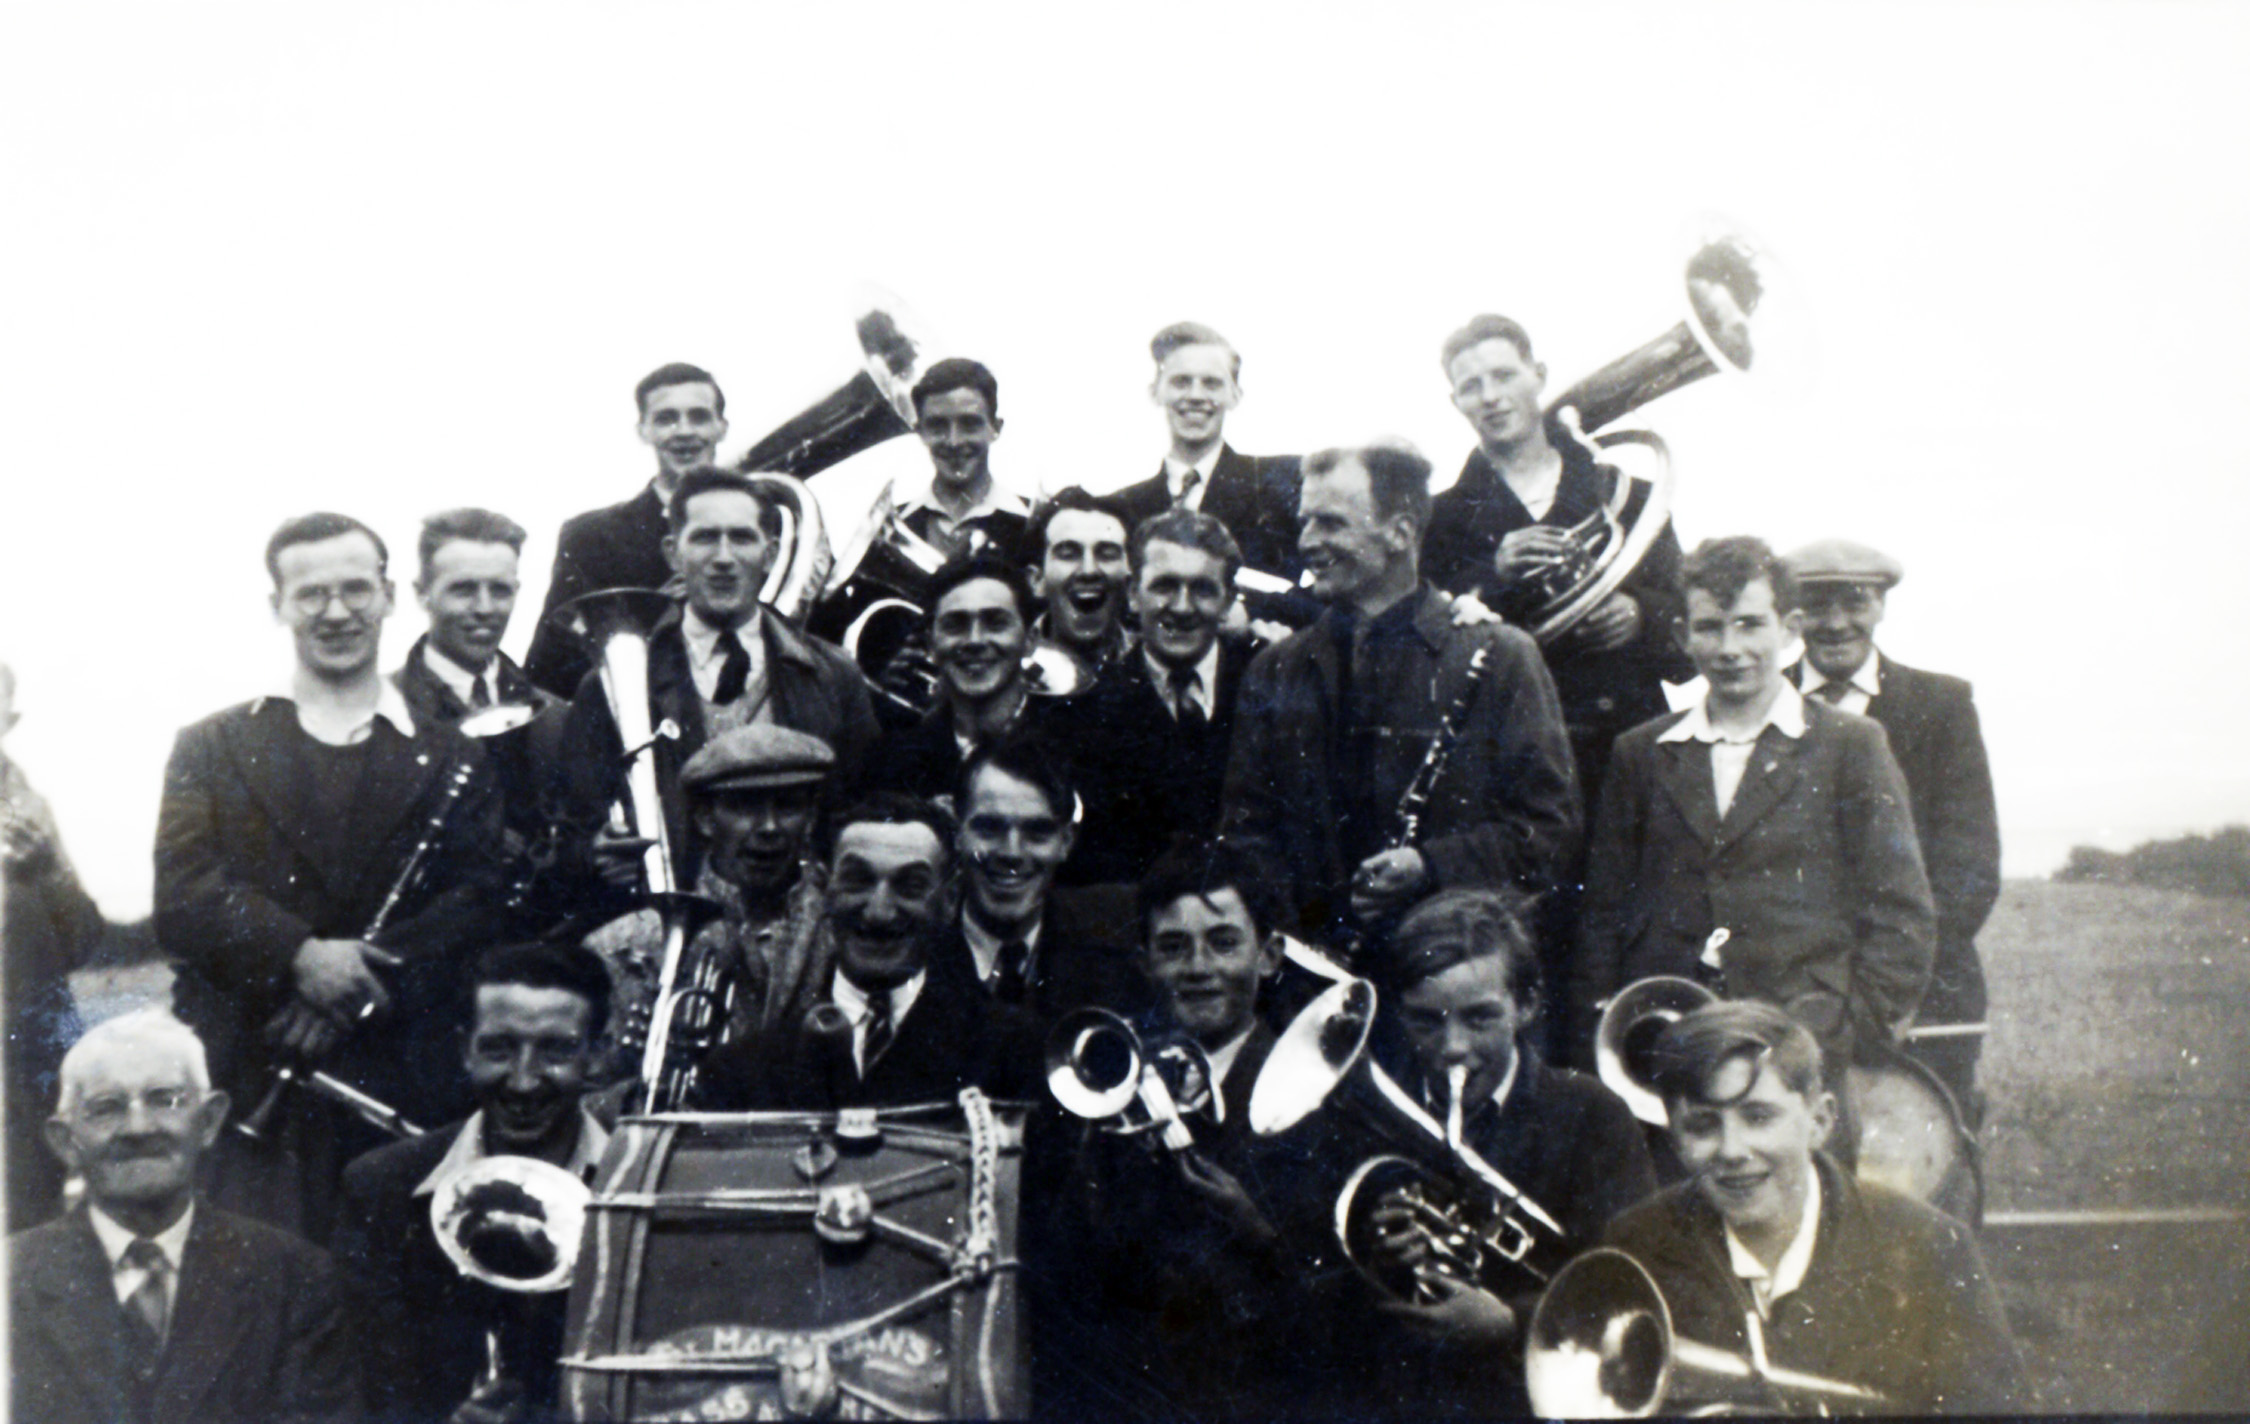 St. Macartan's Brass Band, Carndonagh, c. 1950s